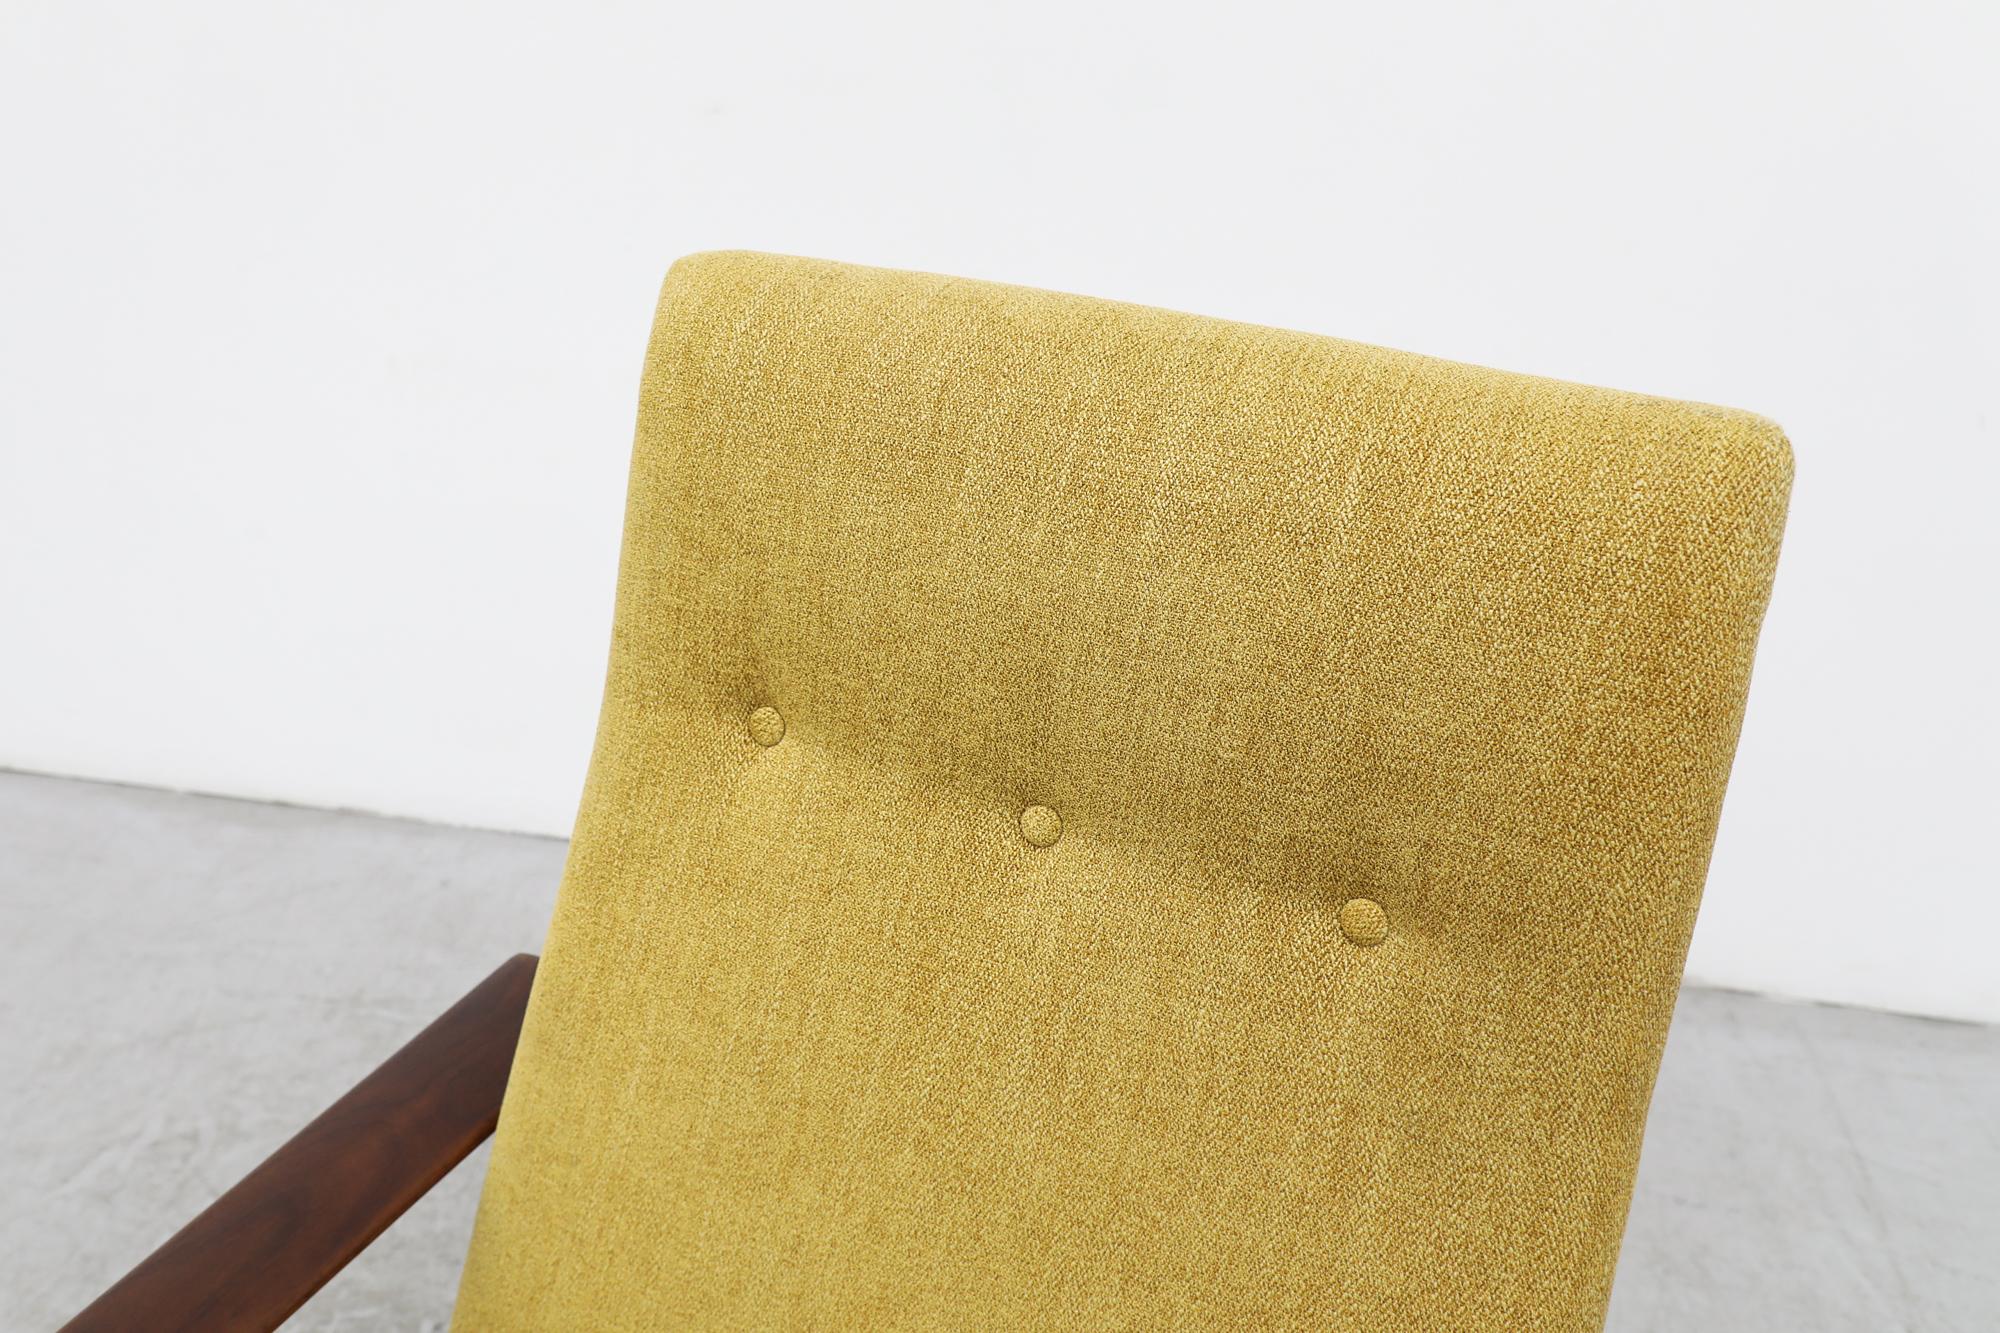 Handsome Hans Wegner Inspired Mid-Century Teak Lounge Chair in Saffron Fabric For Sale 4